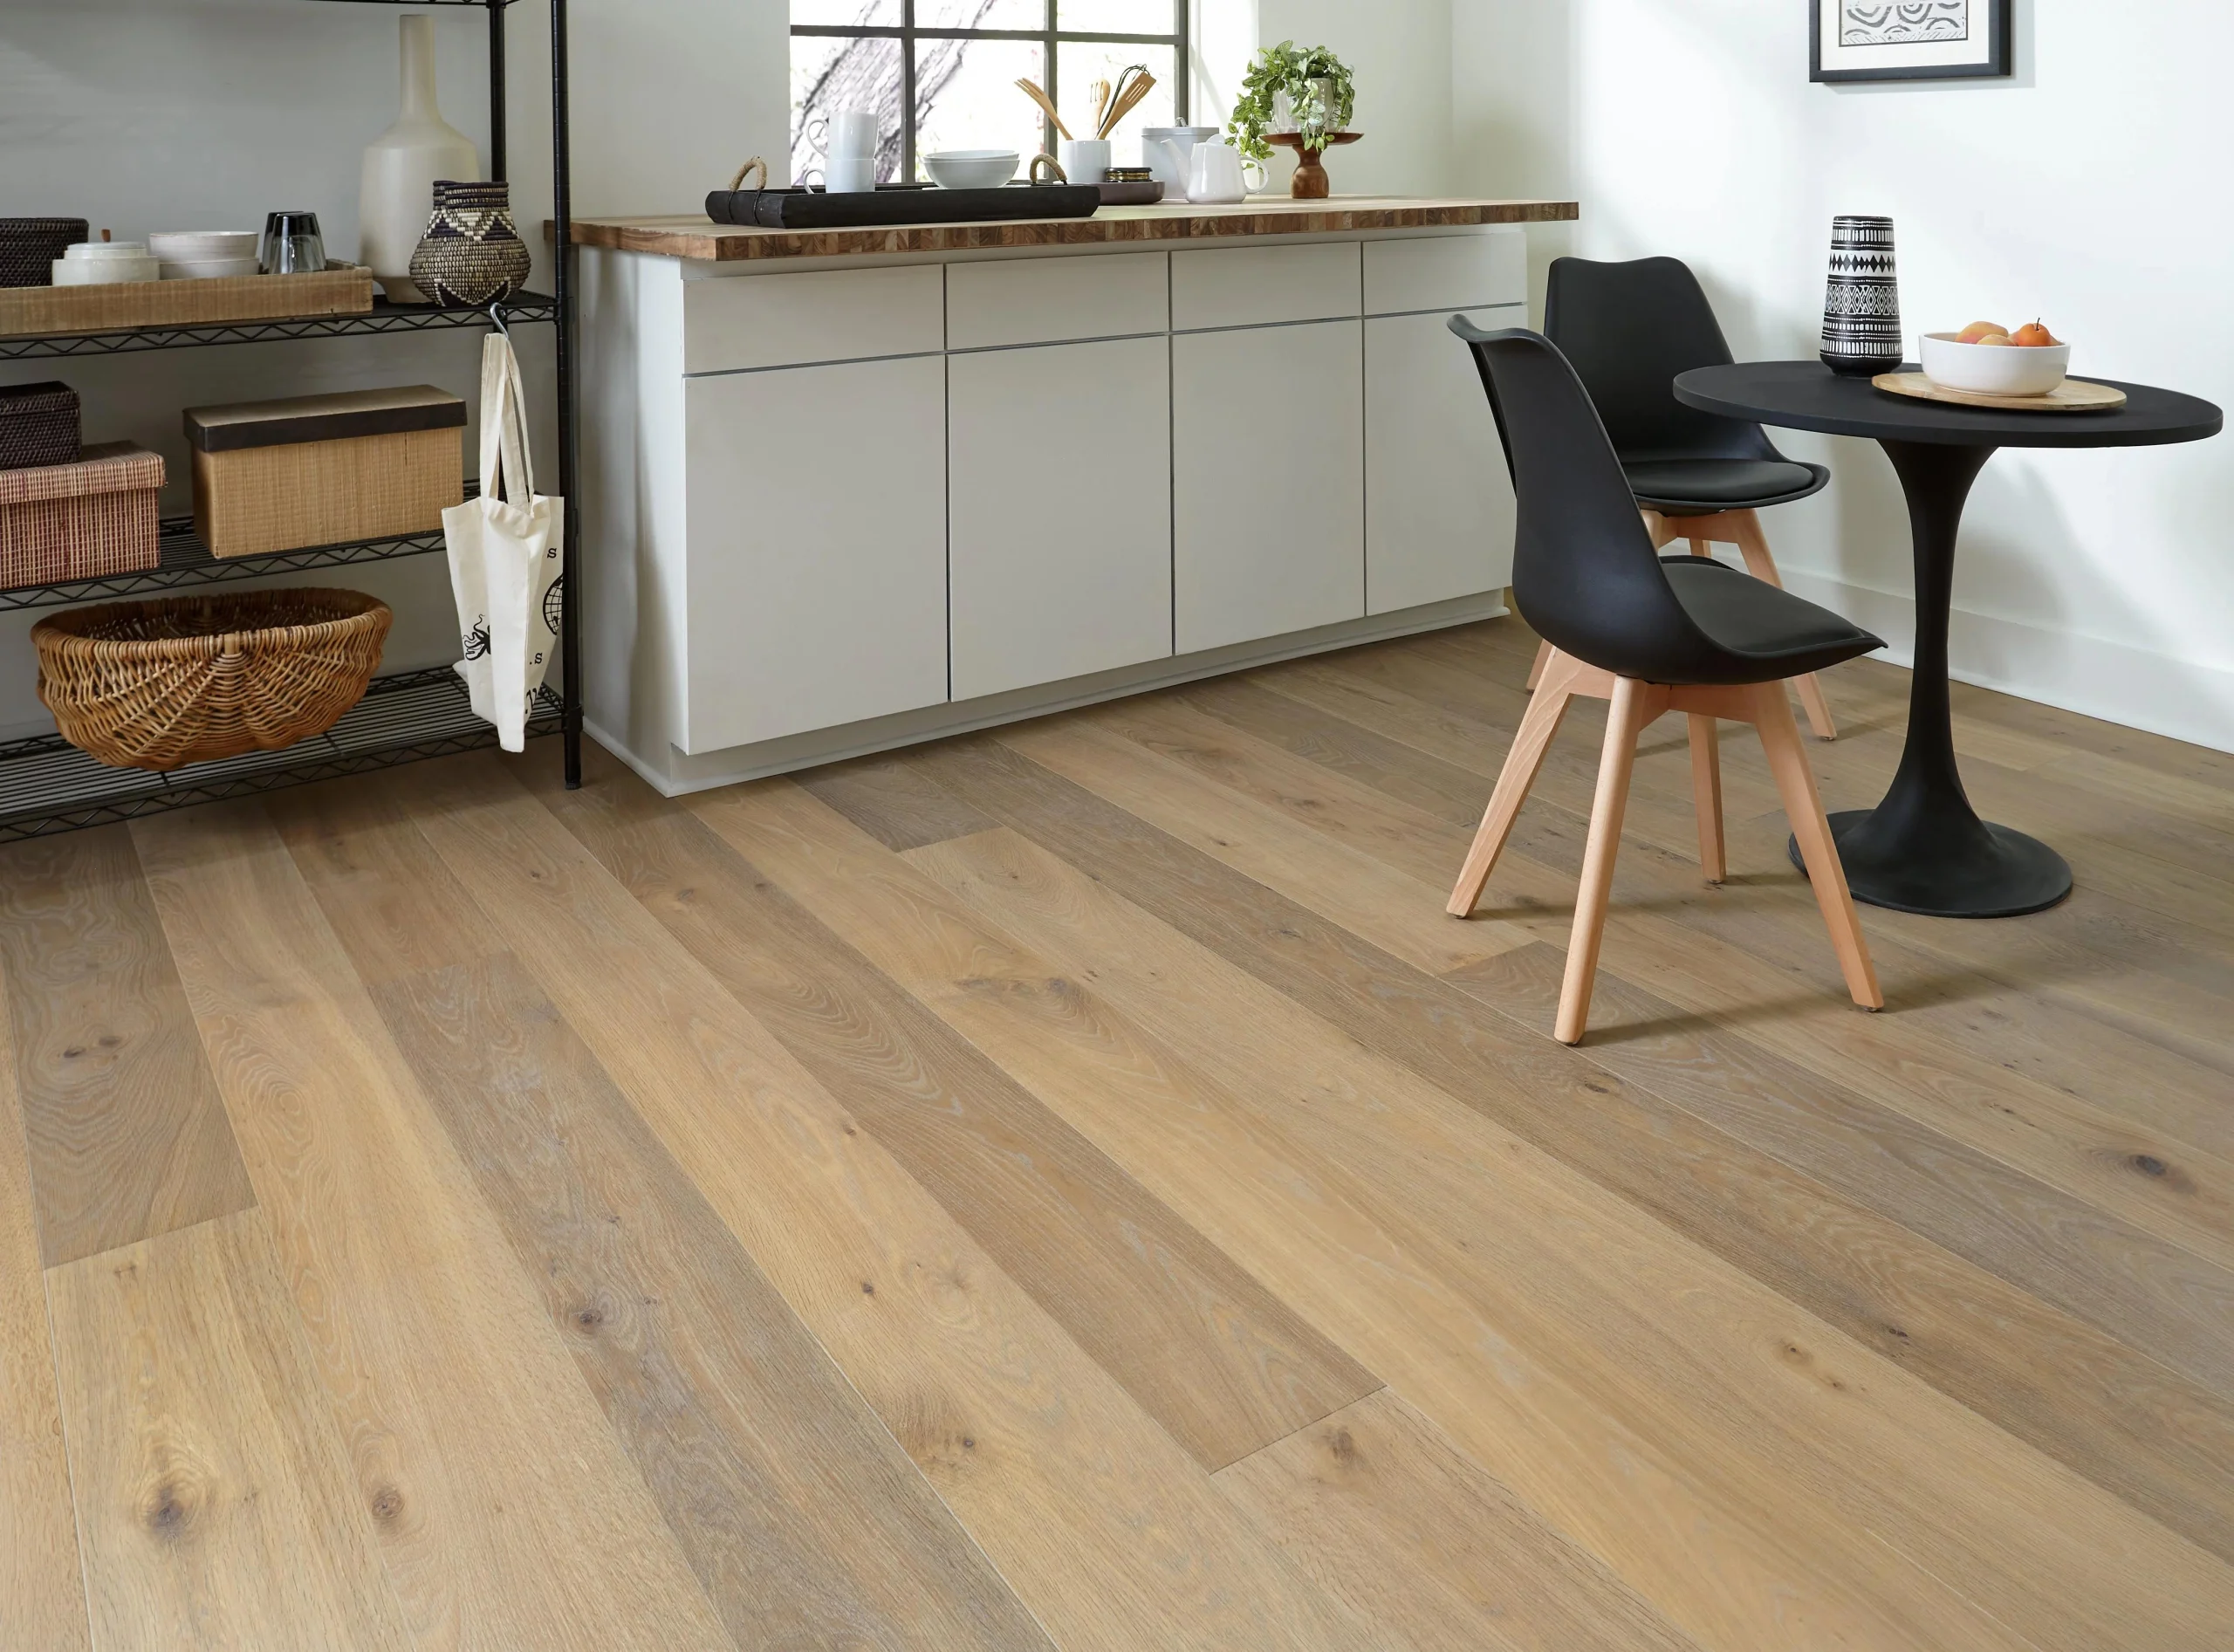 smoked engineered wood flooring - Is engineered wood floor better than laminate